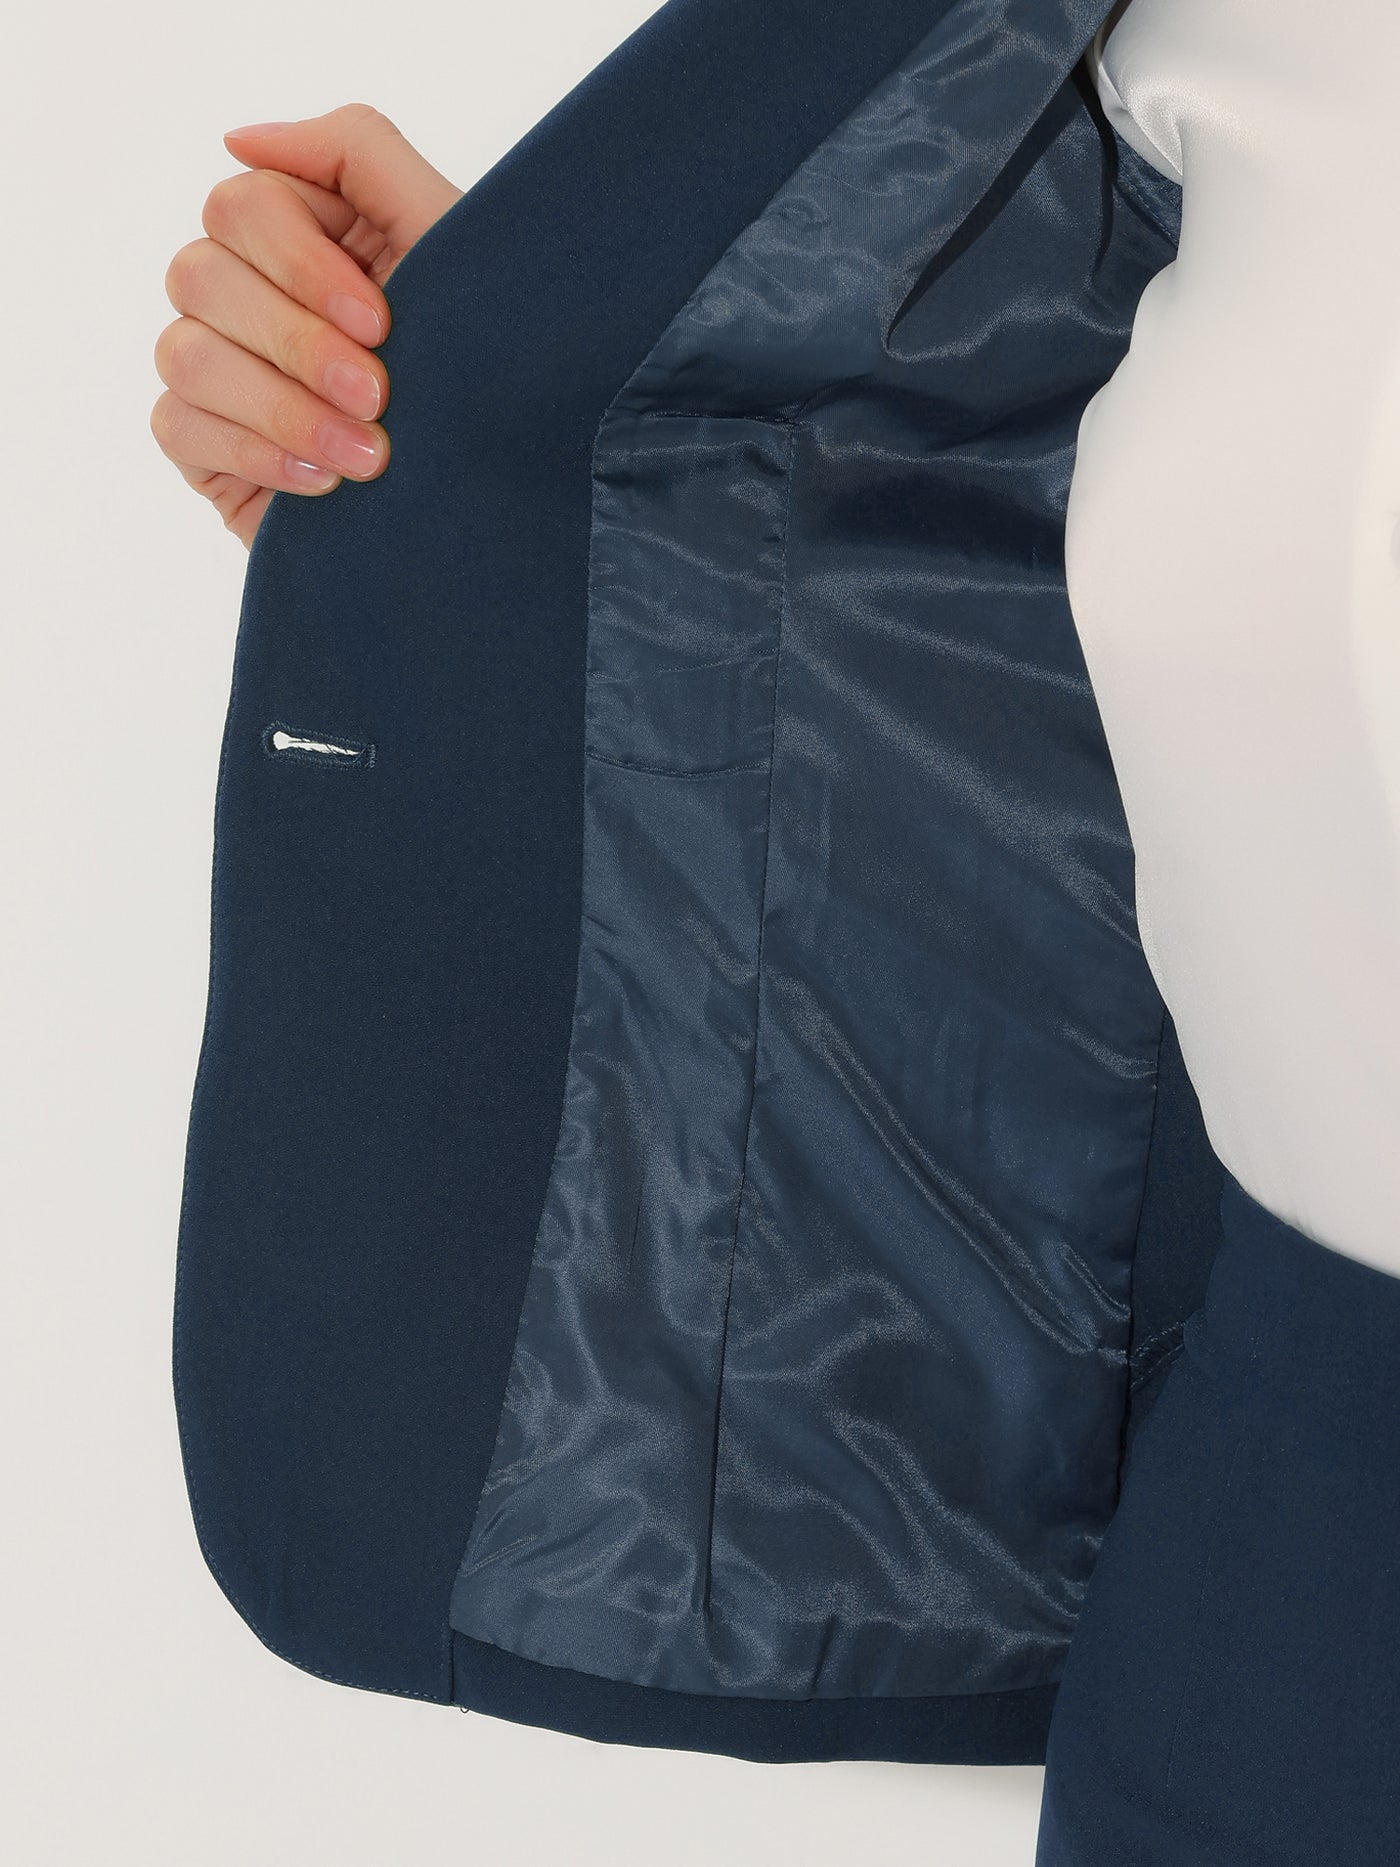 Allegra K Business Casual Long Sleeve Blazer Pencil Skirt 2 Piece Suit Set